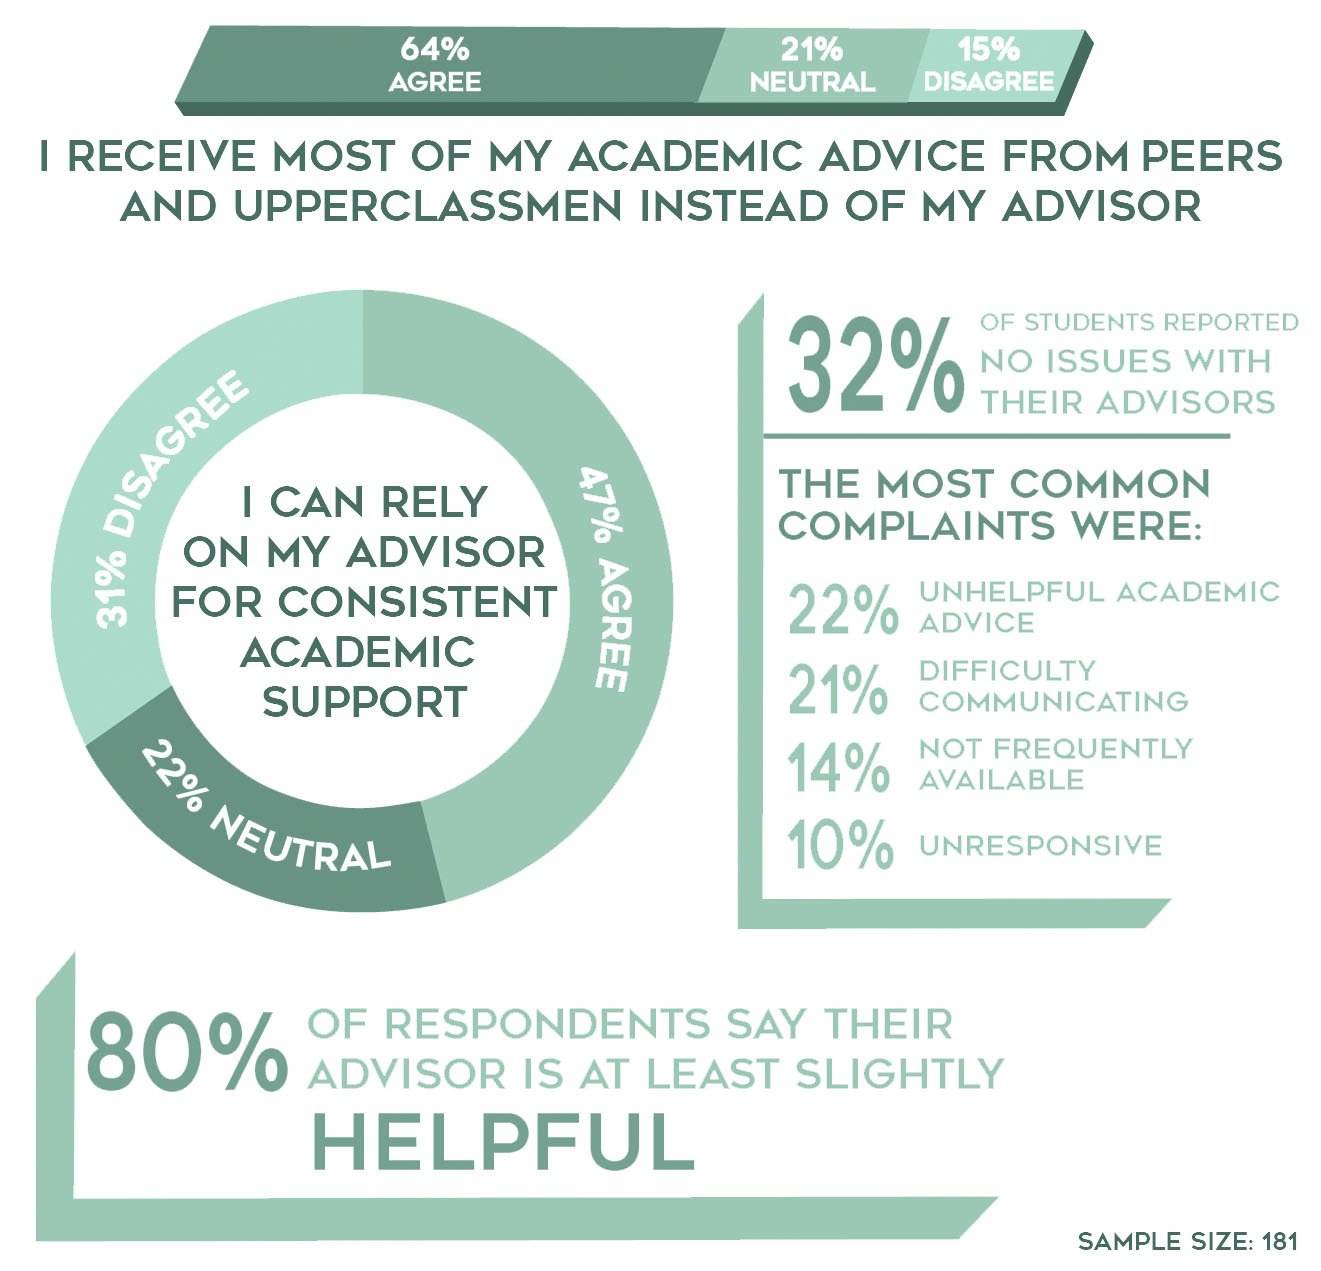 Academic advising: Where do UTD students stand?